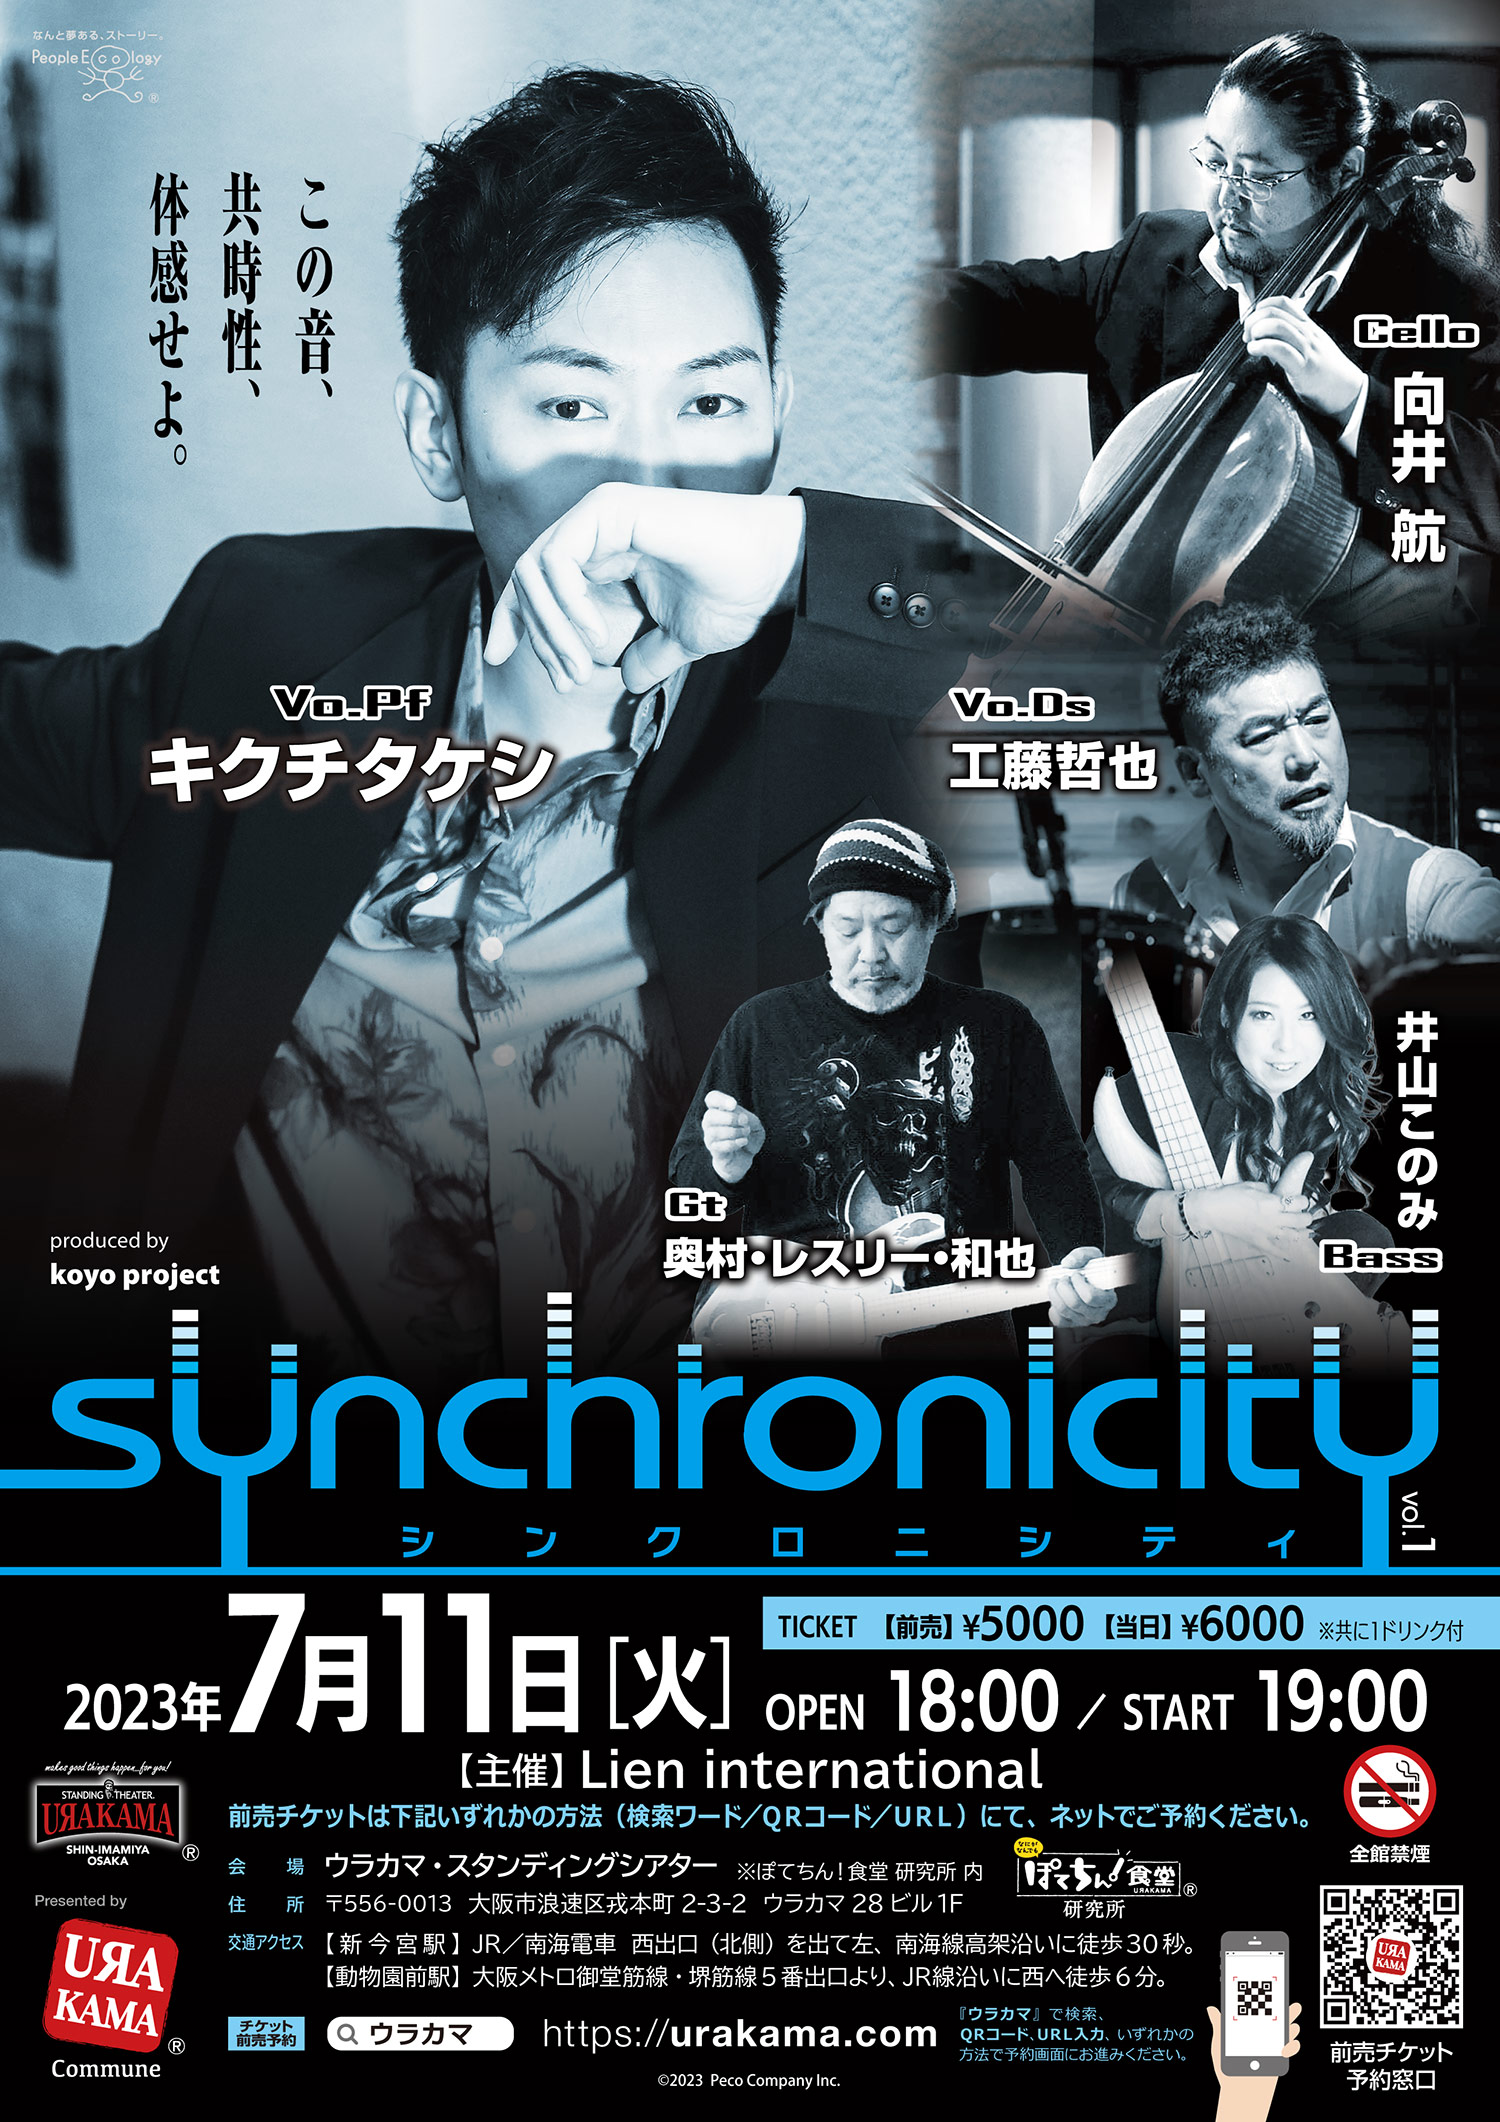 2023年7月11日開催「synchronicity vol.1」